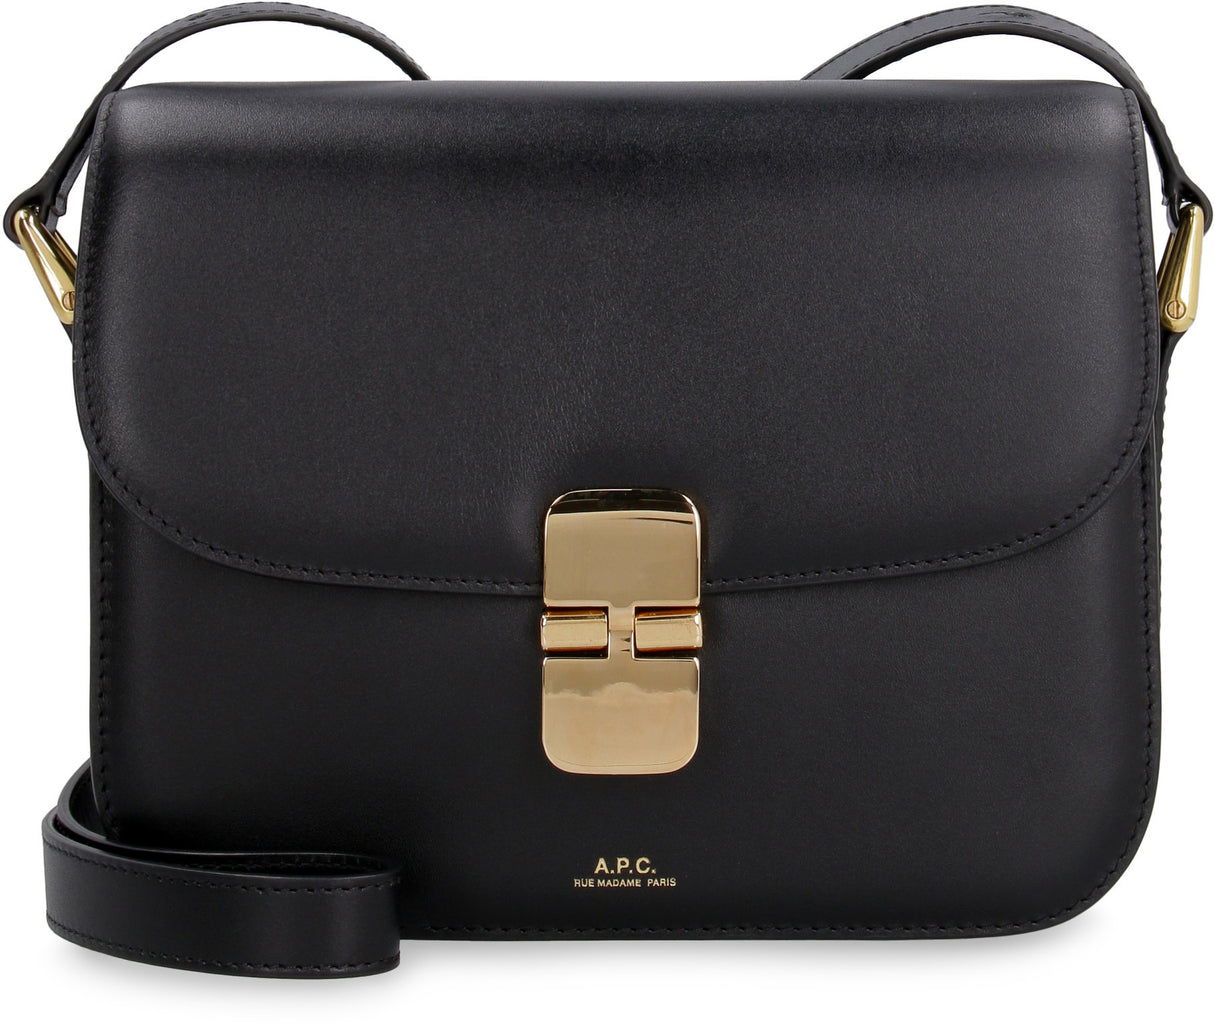 A.P.C. Elegant Black Leather Mini Shoulder Handbag with Gold-Tone Accents and Adjustable Strap, FW24